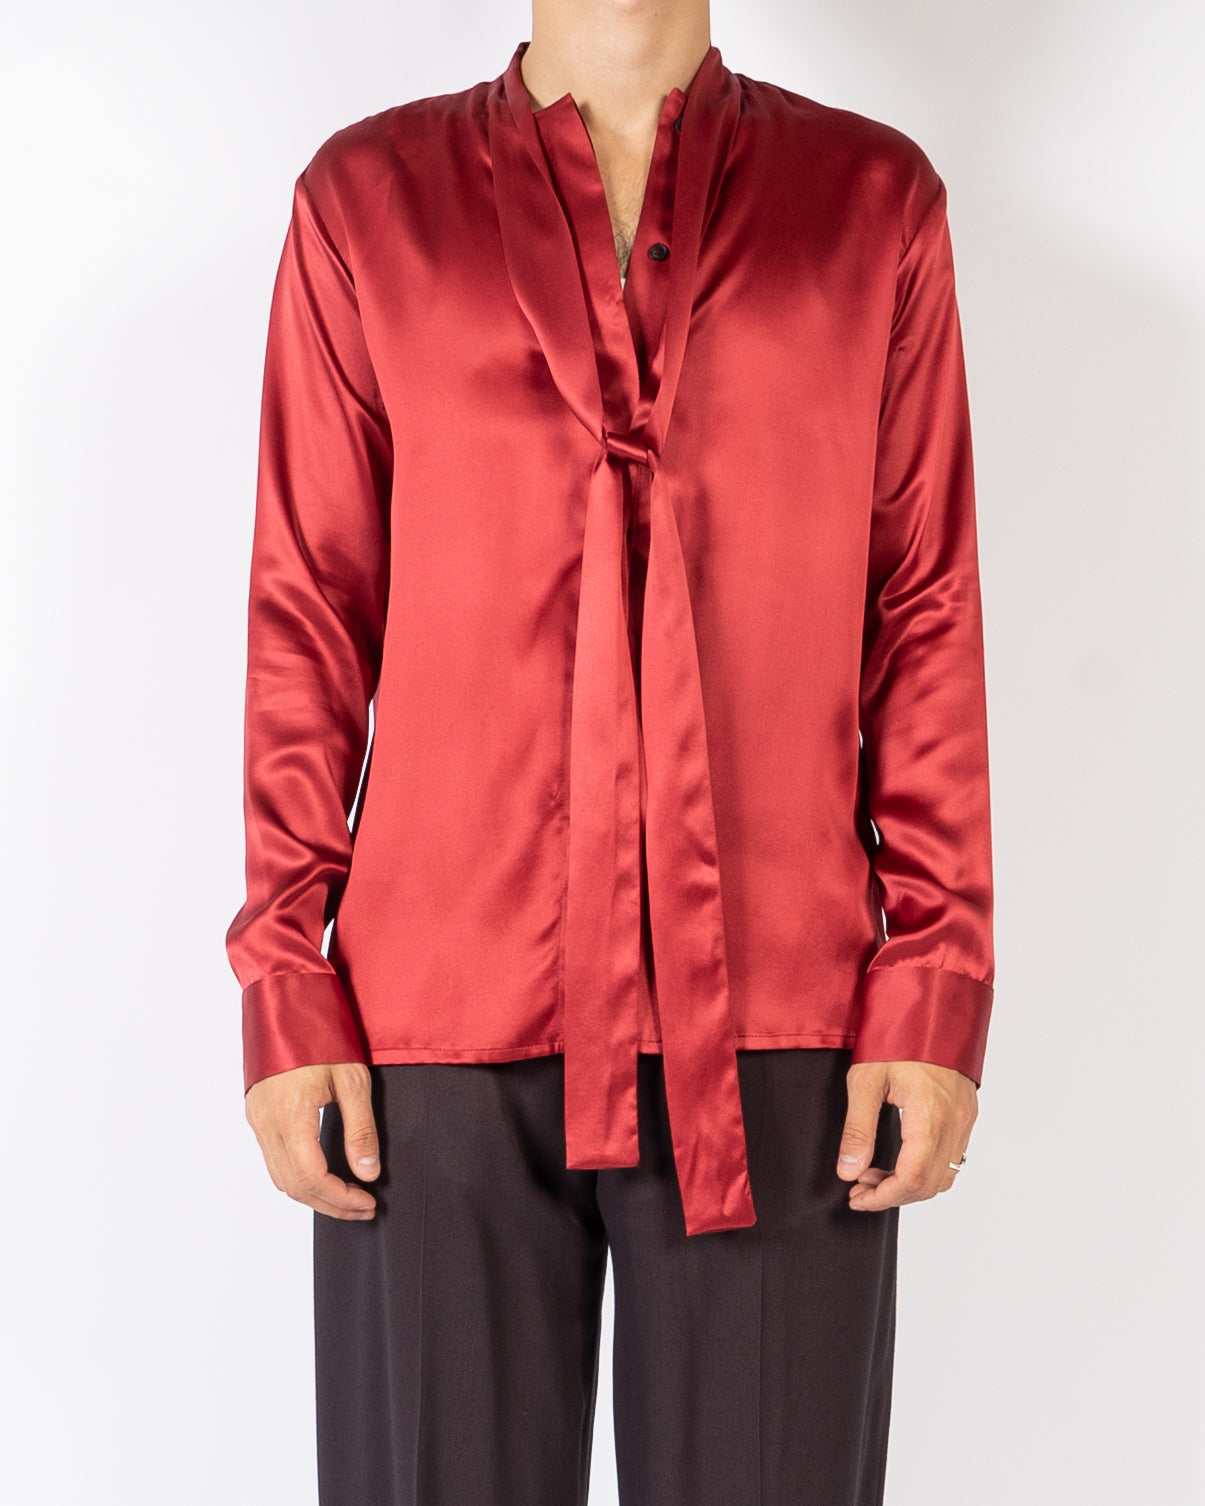 – Collar Shirt Backyardarchive FW18 Silk Red Scarf